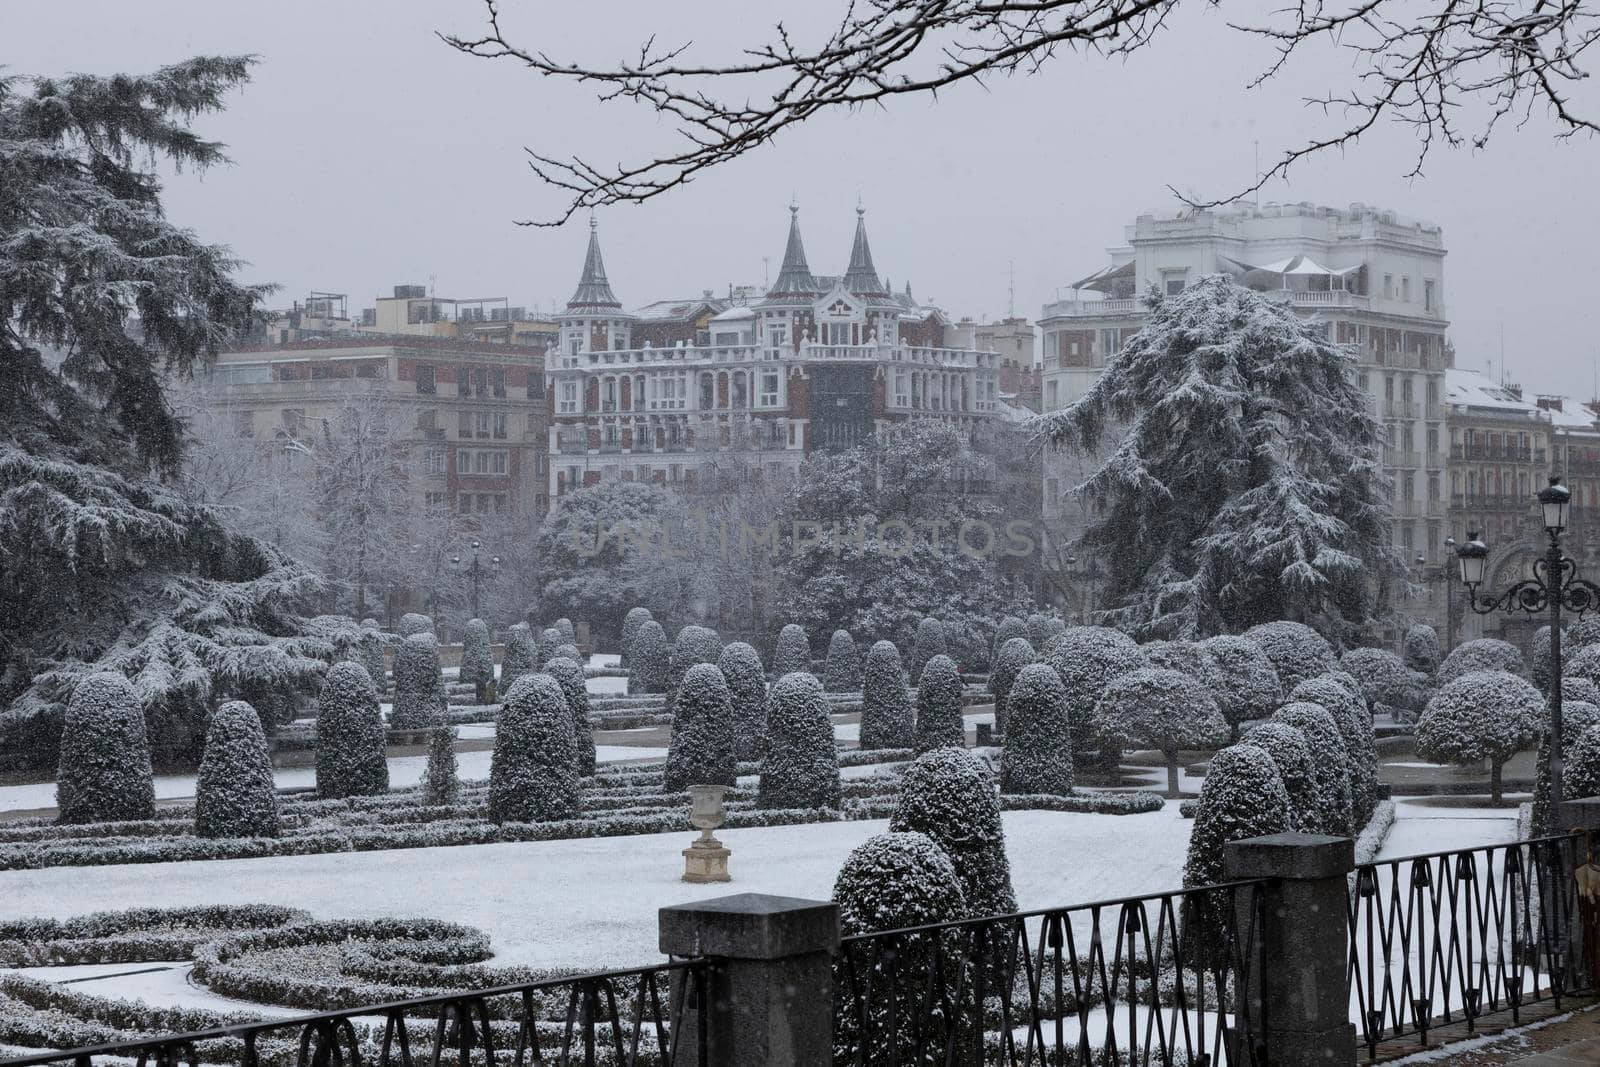 Parterre gardens in a snowy day, Madrid. by alvarobueno